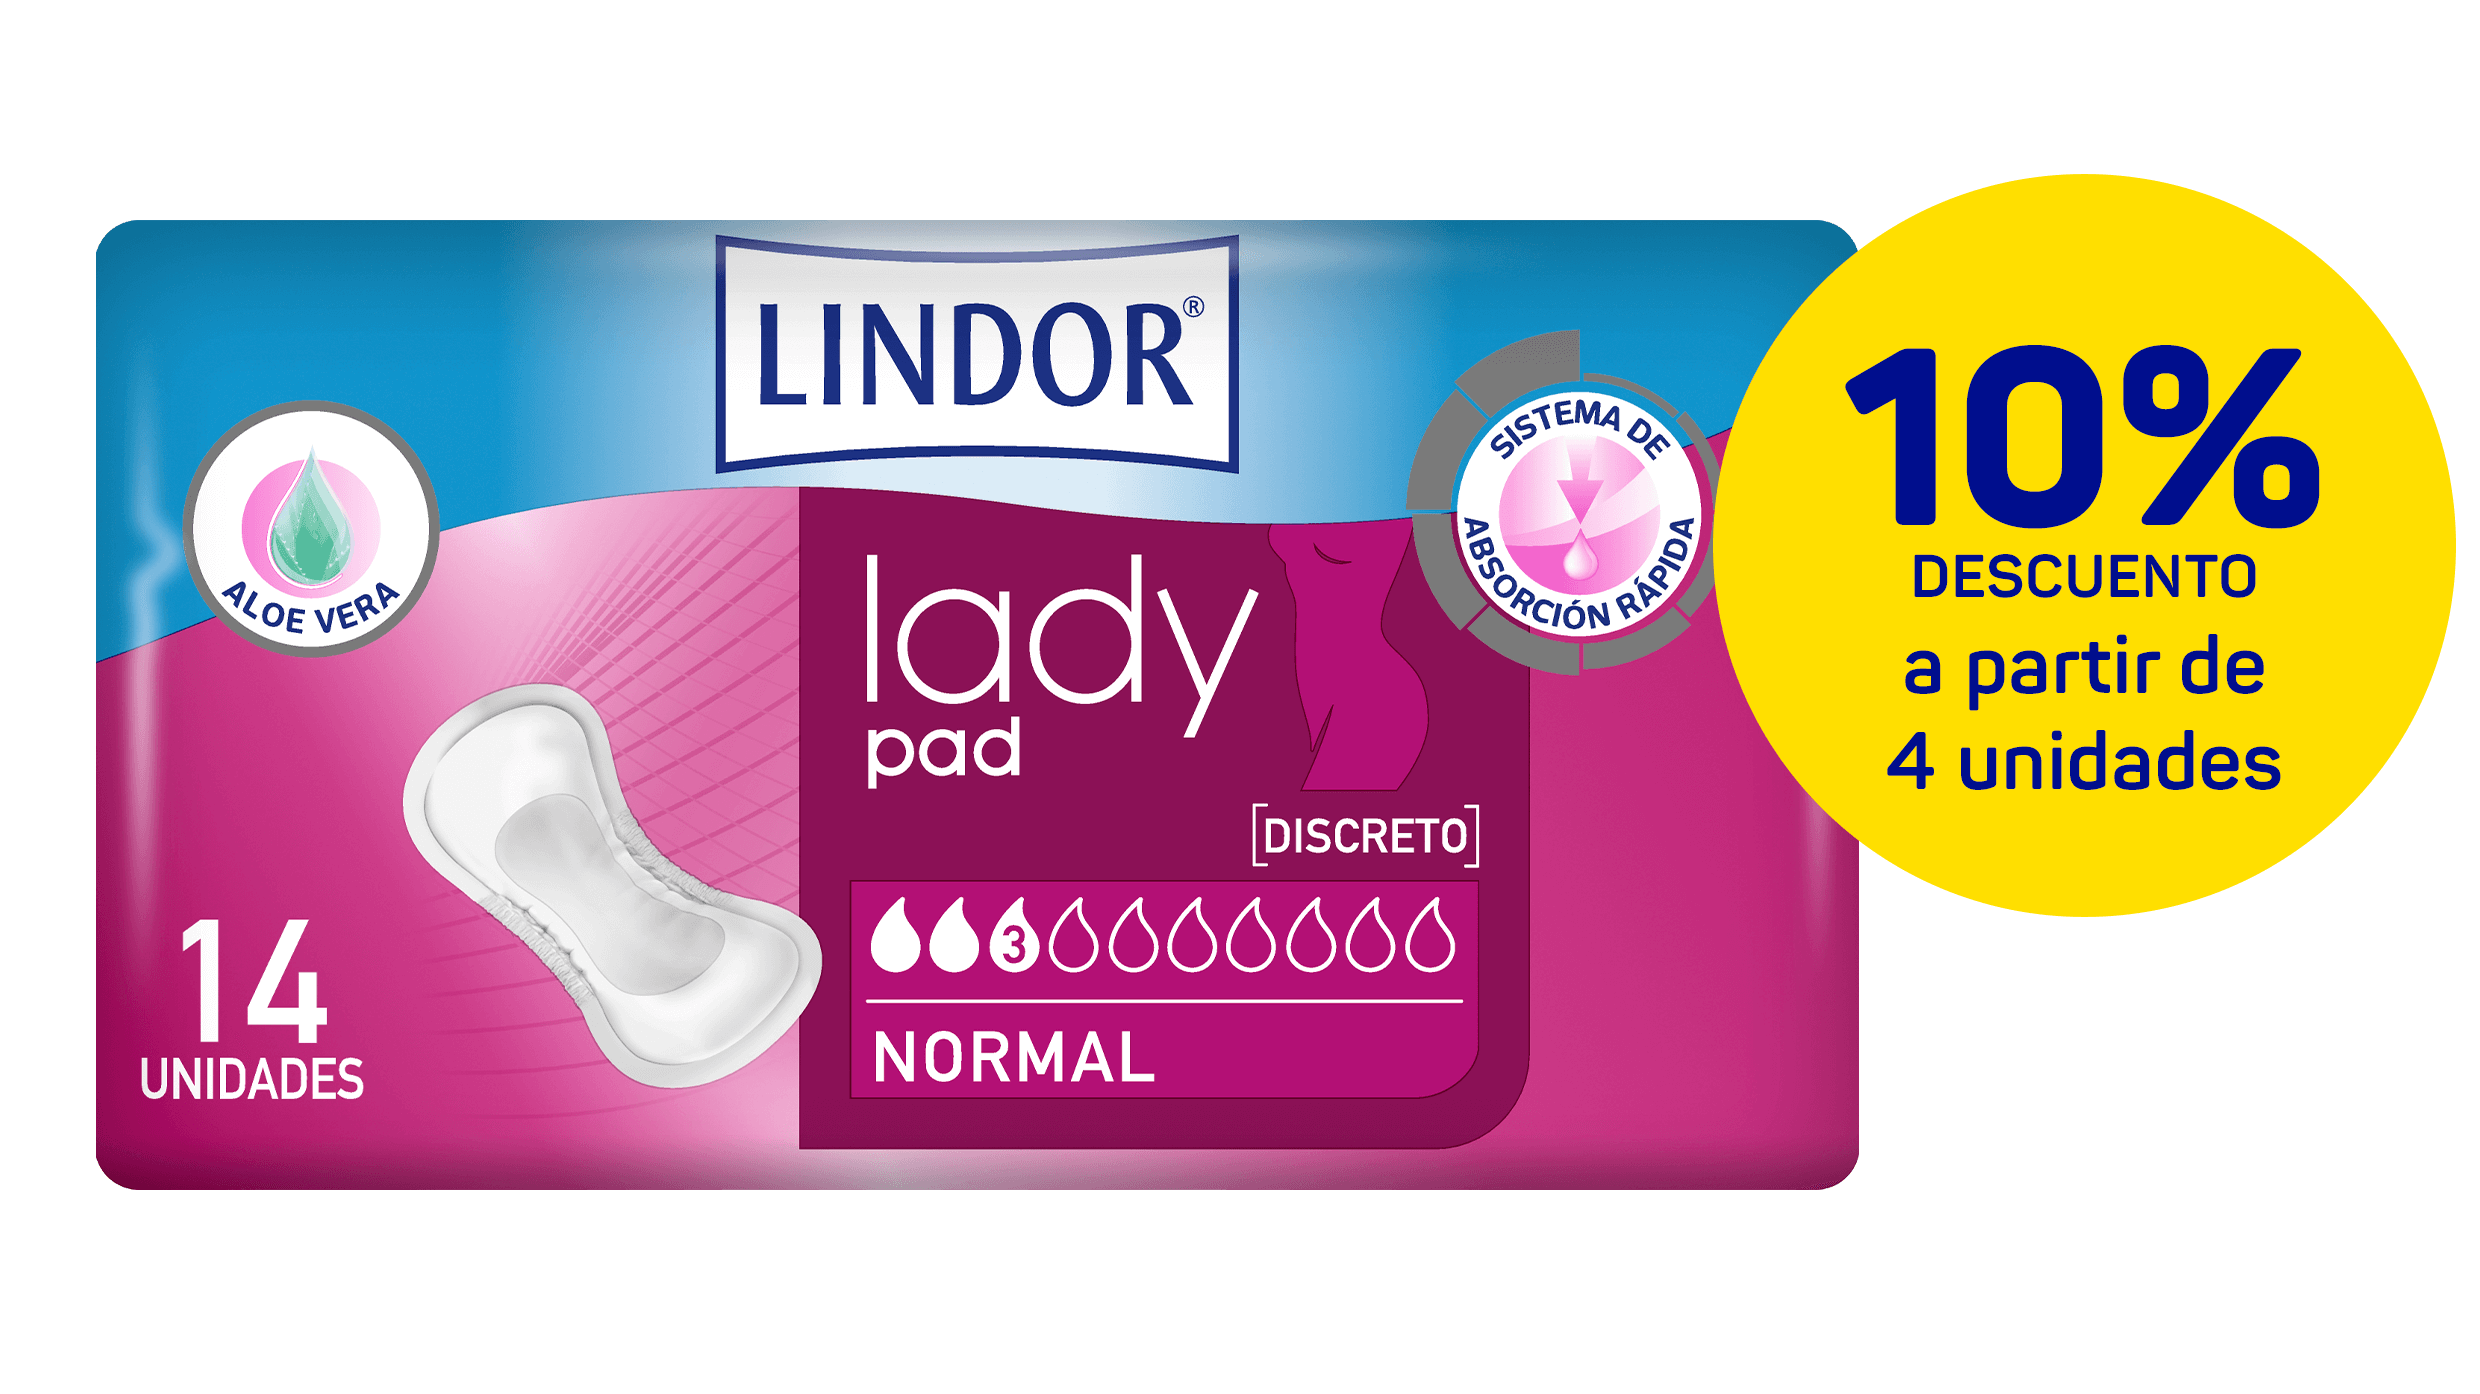 Lindor Lady - descuento 10% a partir de 4 unidades